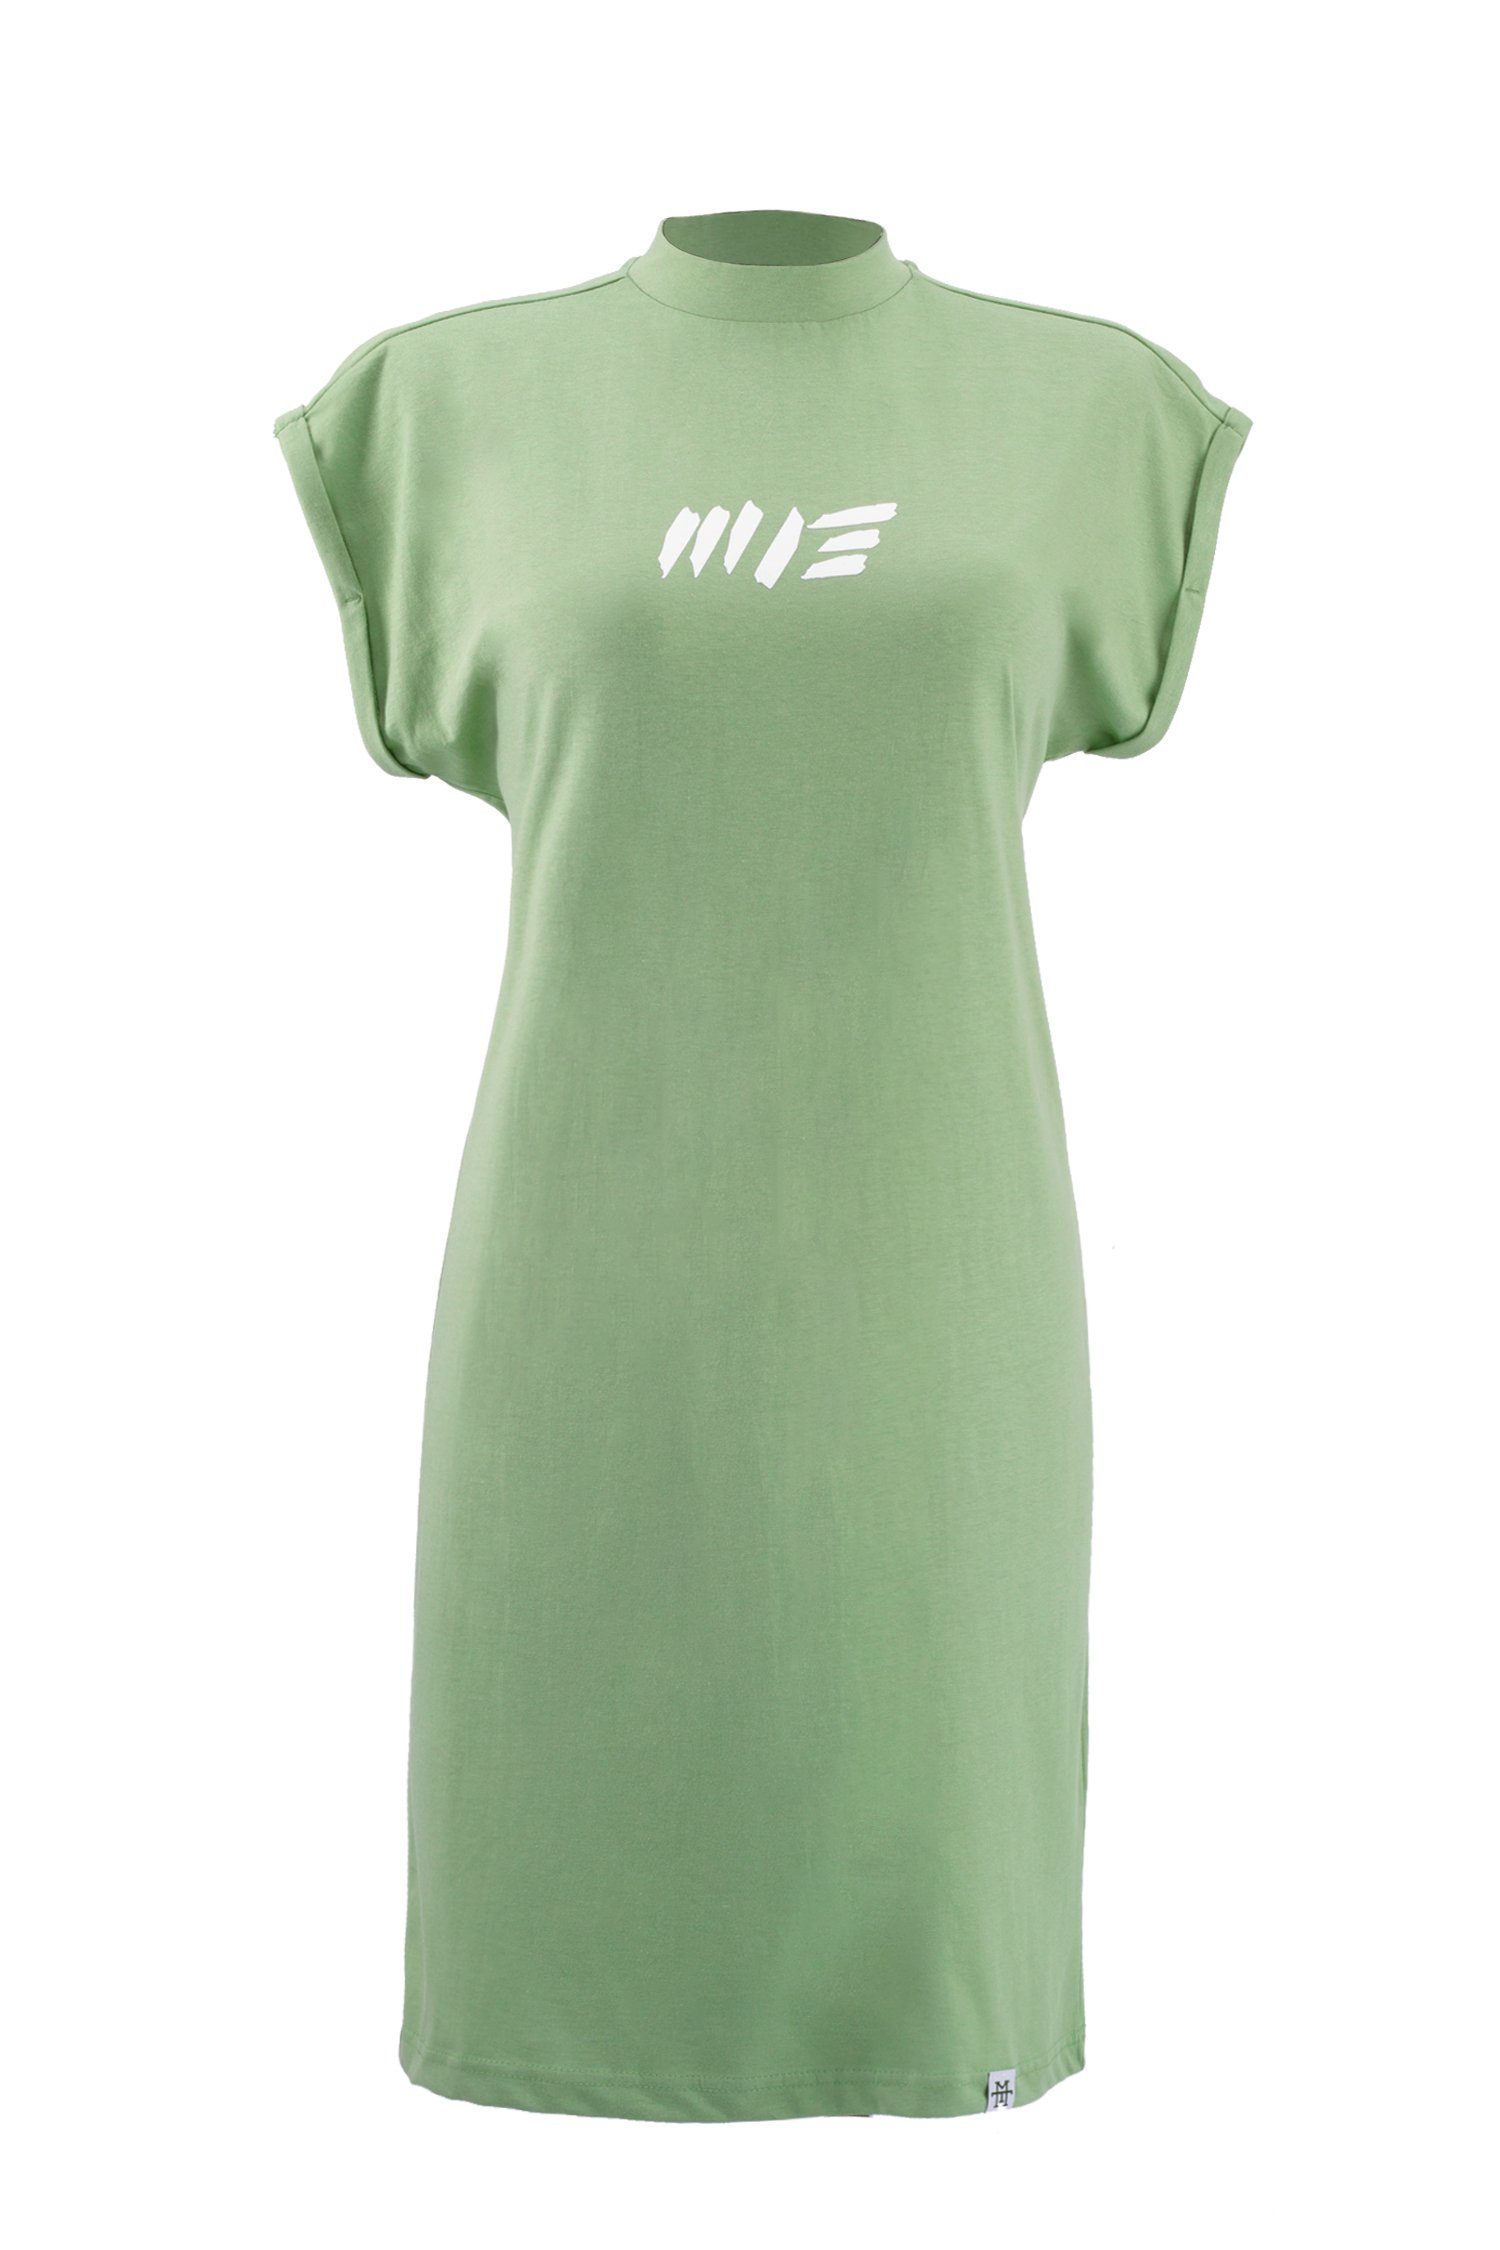 Manufaktur13 Shirtkleid Summer Tee Dress - Sommerkleid, T-Shirt Kleid, Jerseykleid 100% Baumwolle Sage | 